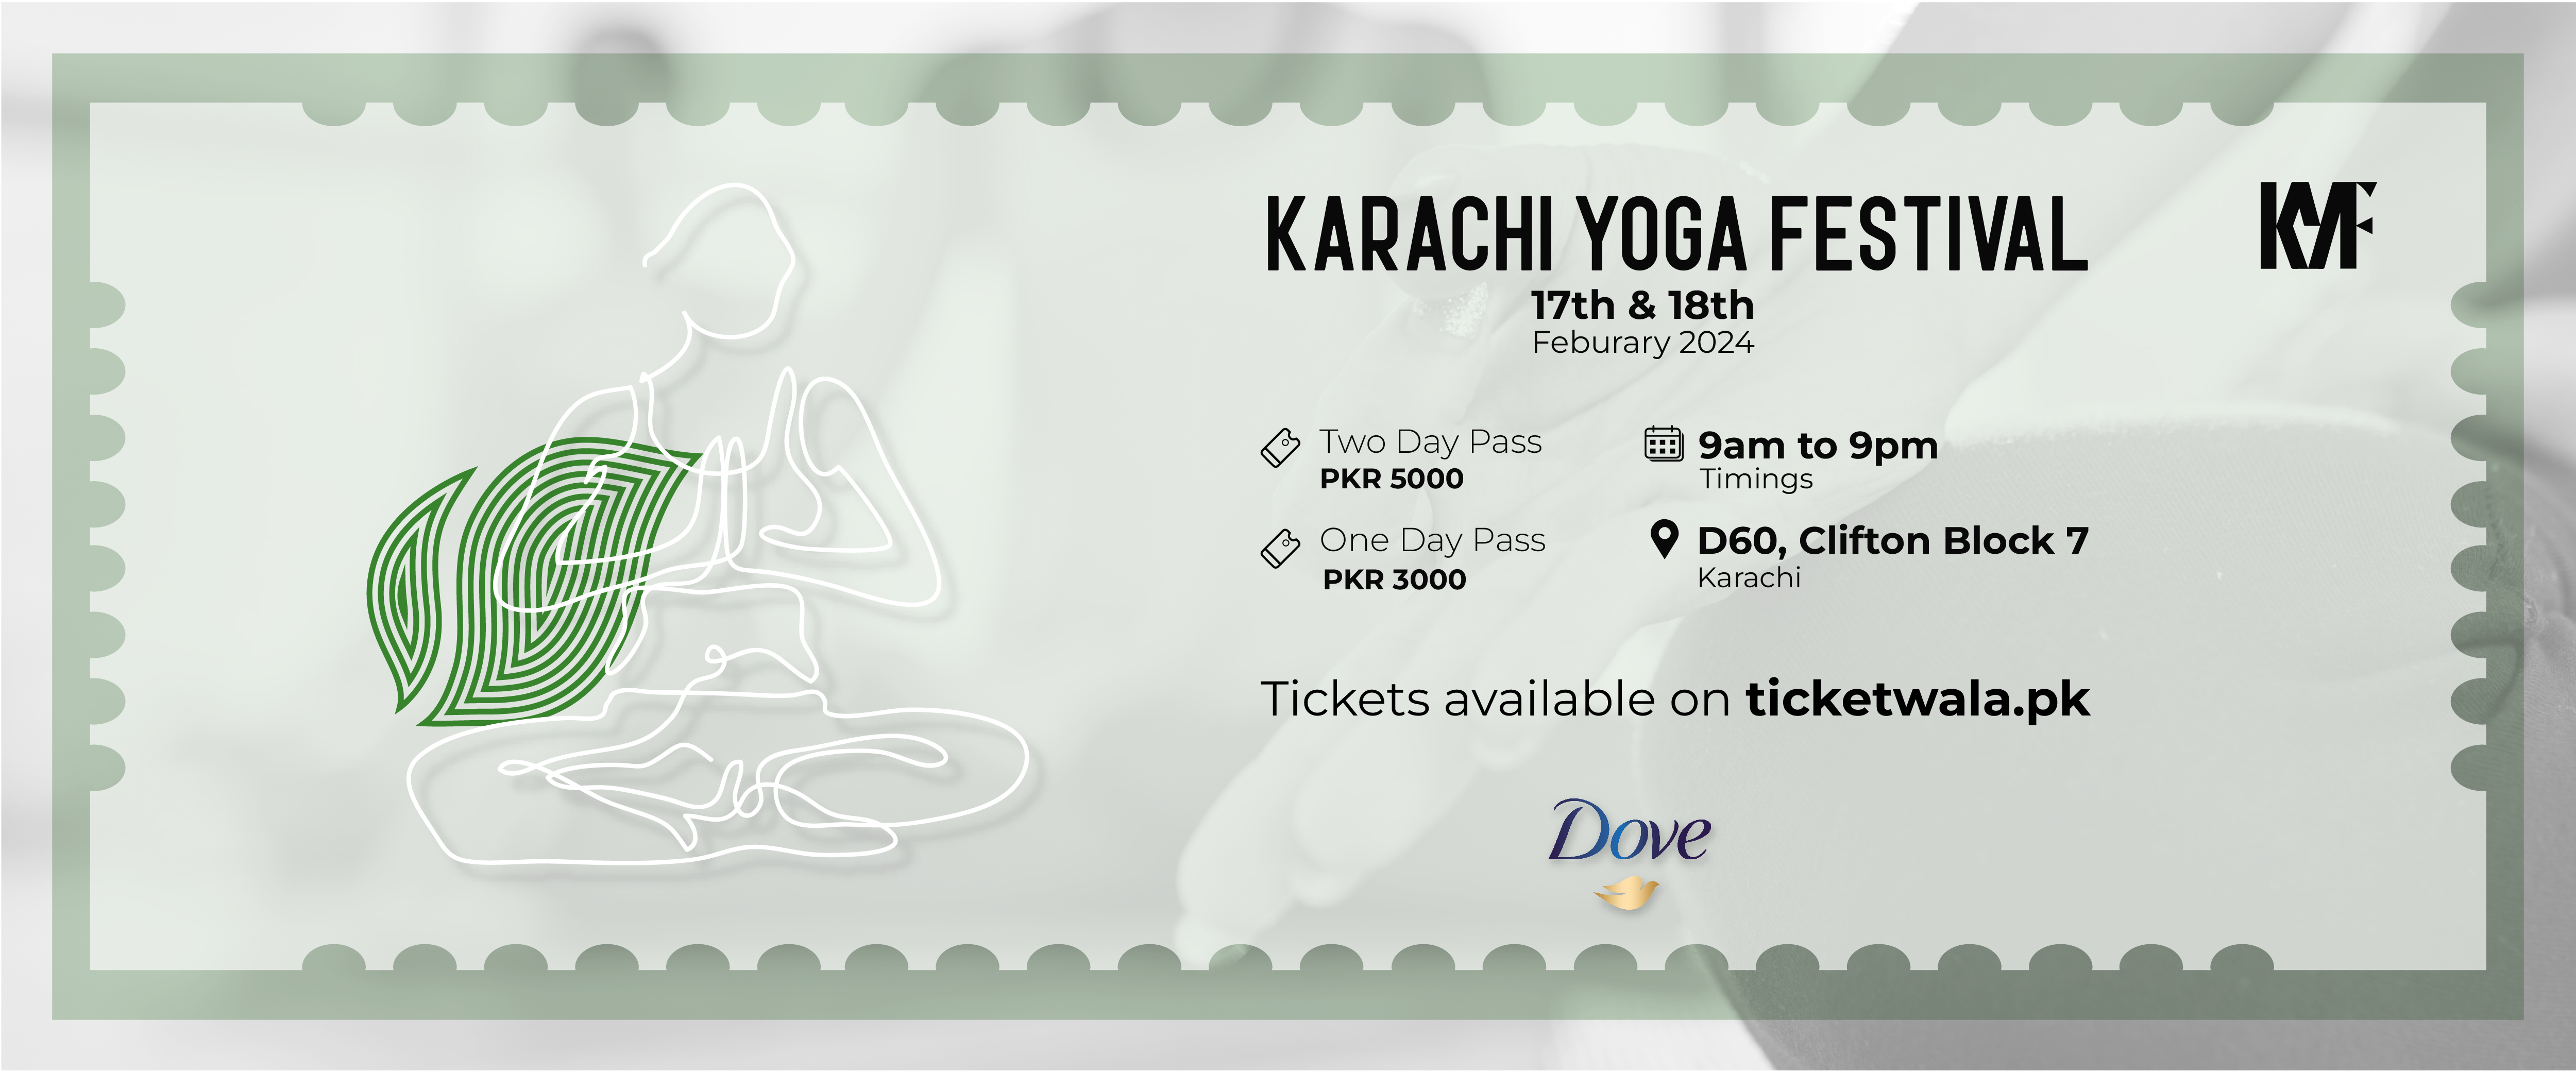 Karachi Yoga Festival